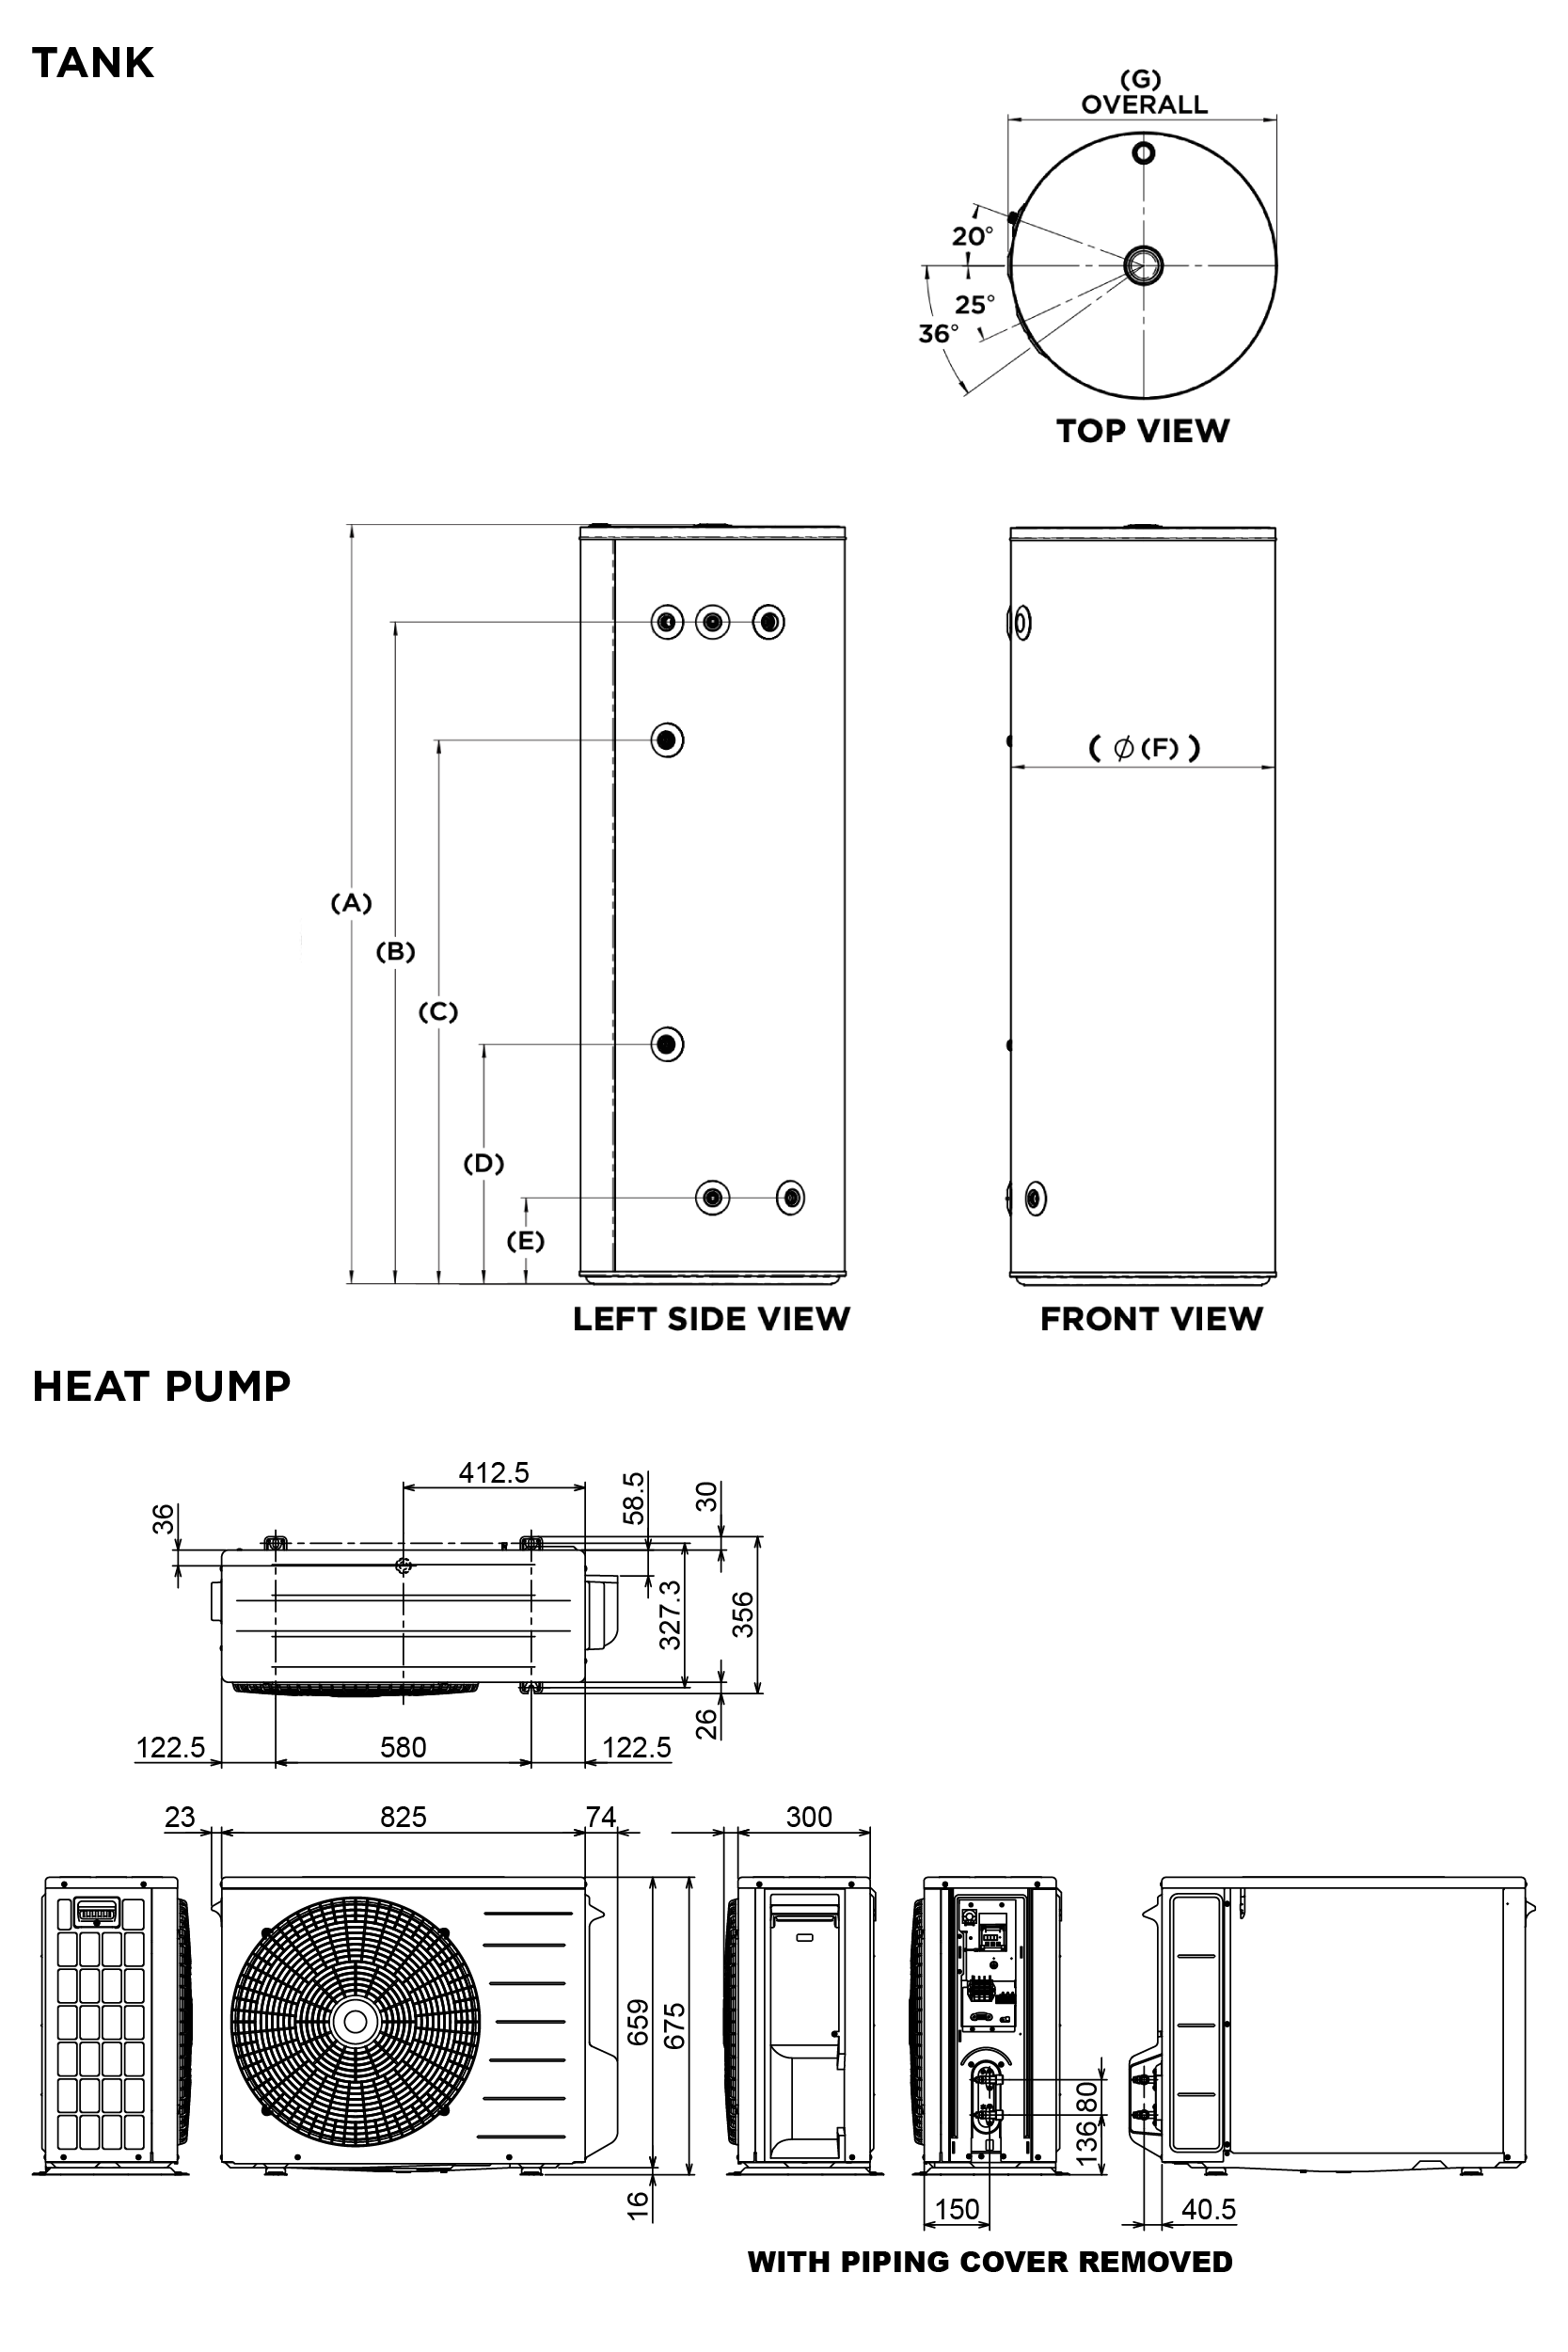 Split Heat Pump line drawing